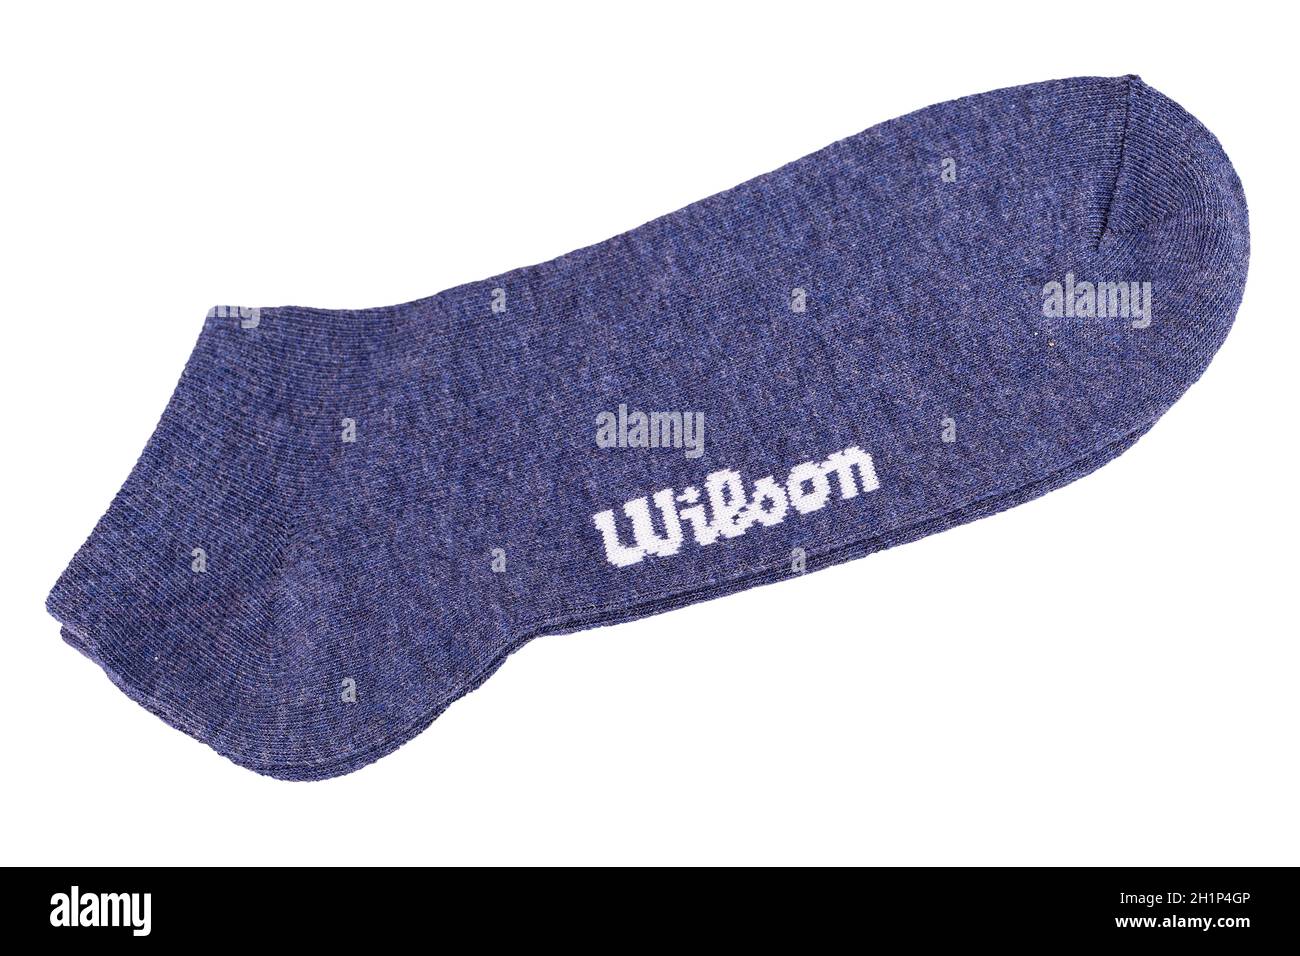 Kamchatka, Russia 10 Jule 2019: Wilson brand sports socks isolated on white background Stock Photo